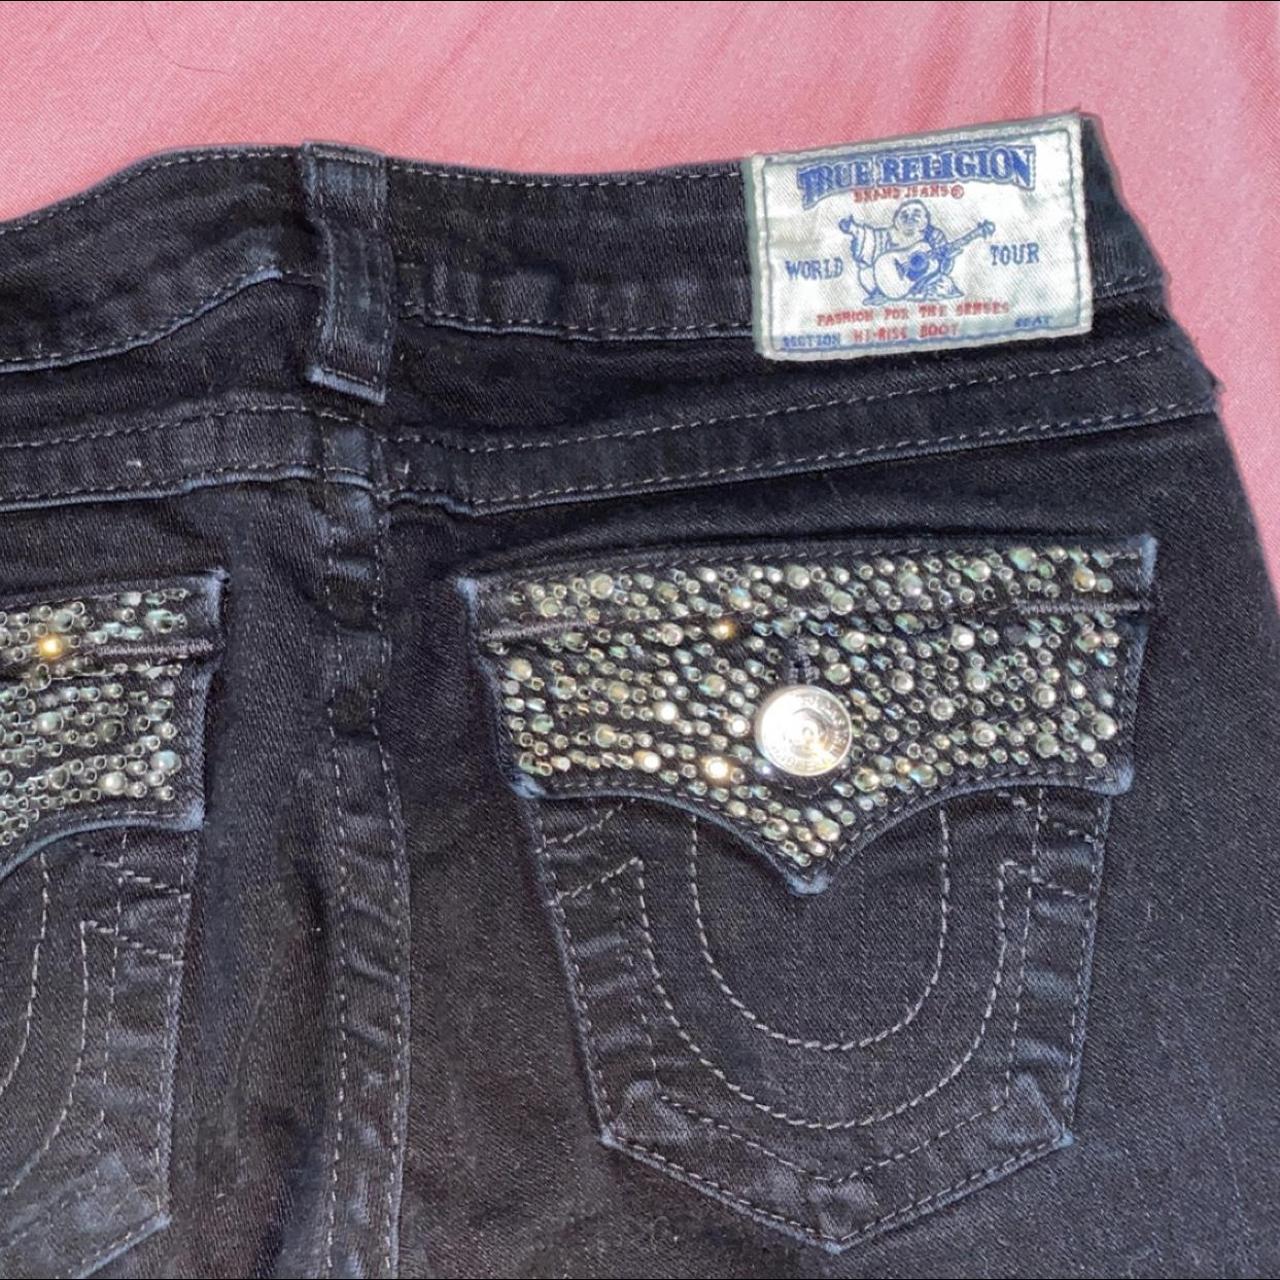 Low rise true religion jeans Size 28 Hardly worn... - Depop